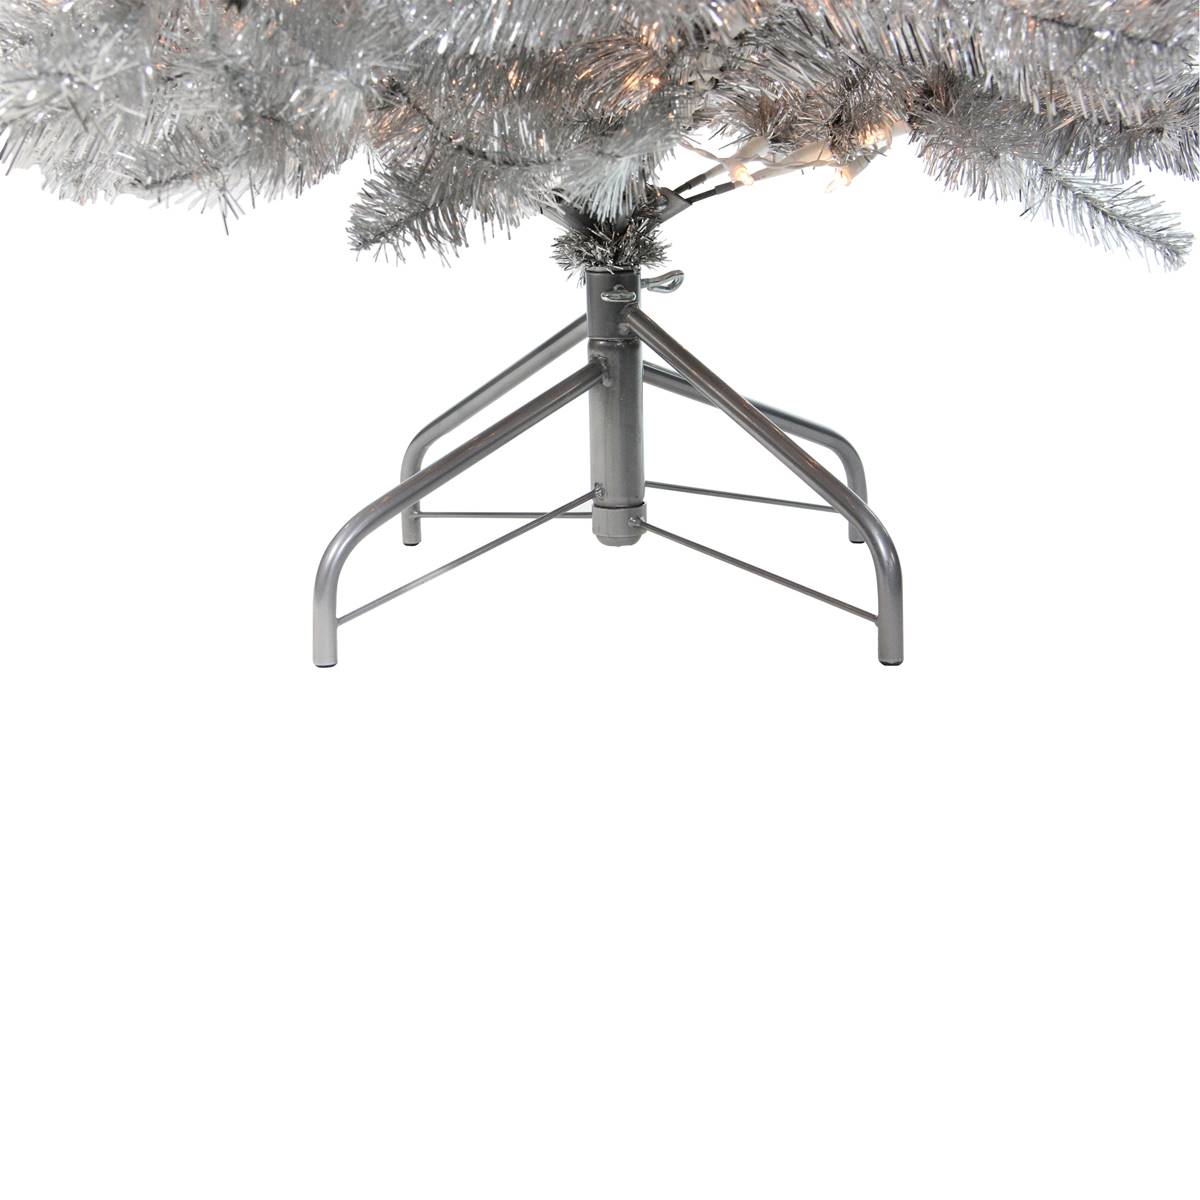 Northlight 4.5ft. Metallic Artificial Tinsel Christmas Tree